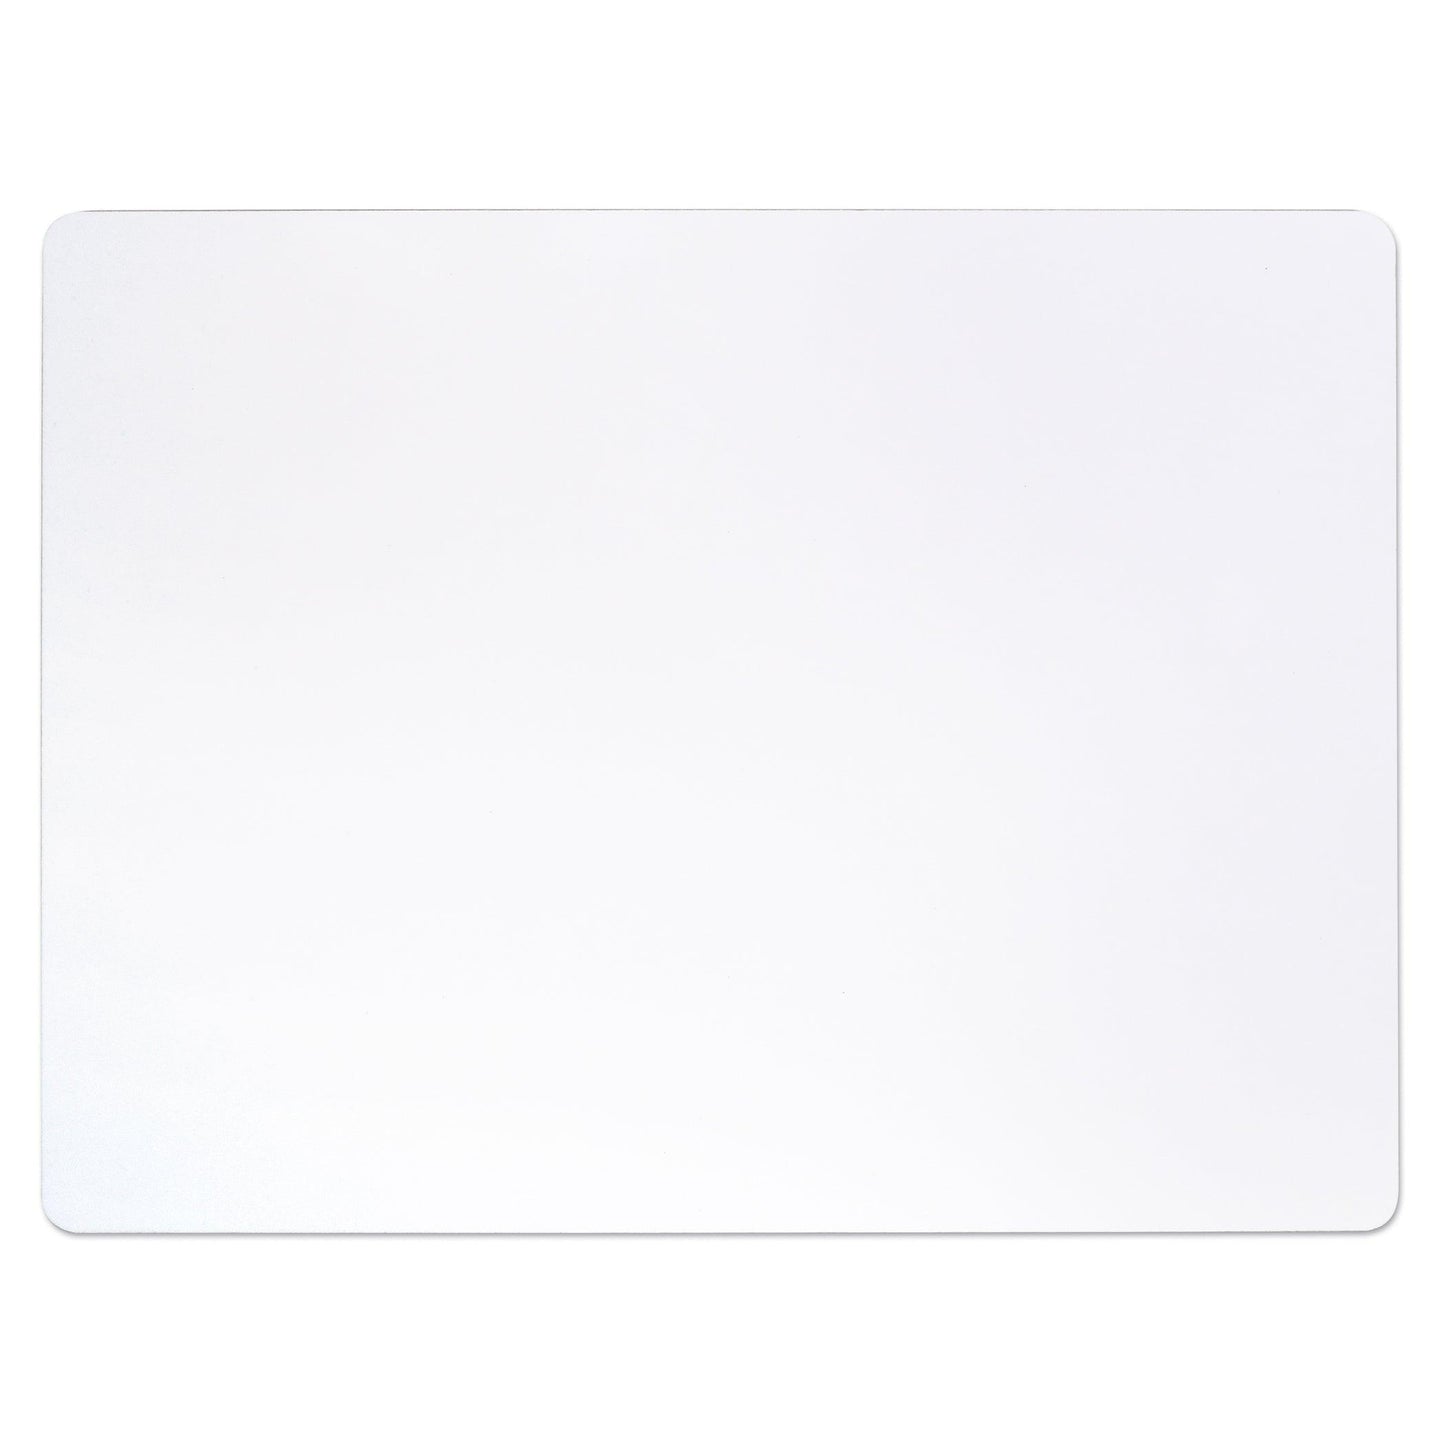 Combo Board, 2-Sided, Chalk/Whiteboard, 9" x 12", 10 Boards - Loomini